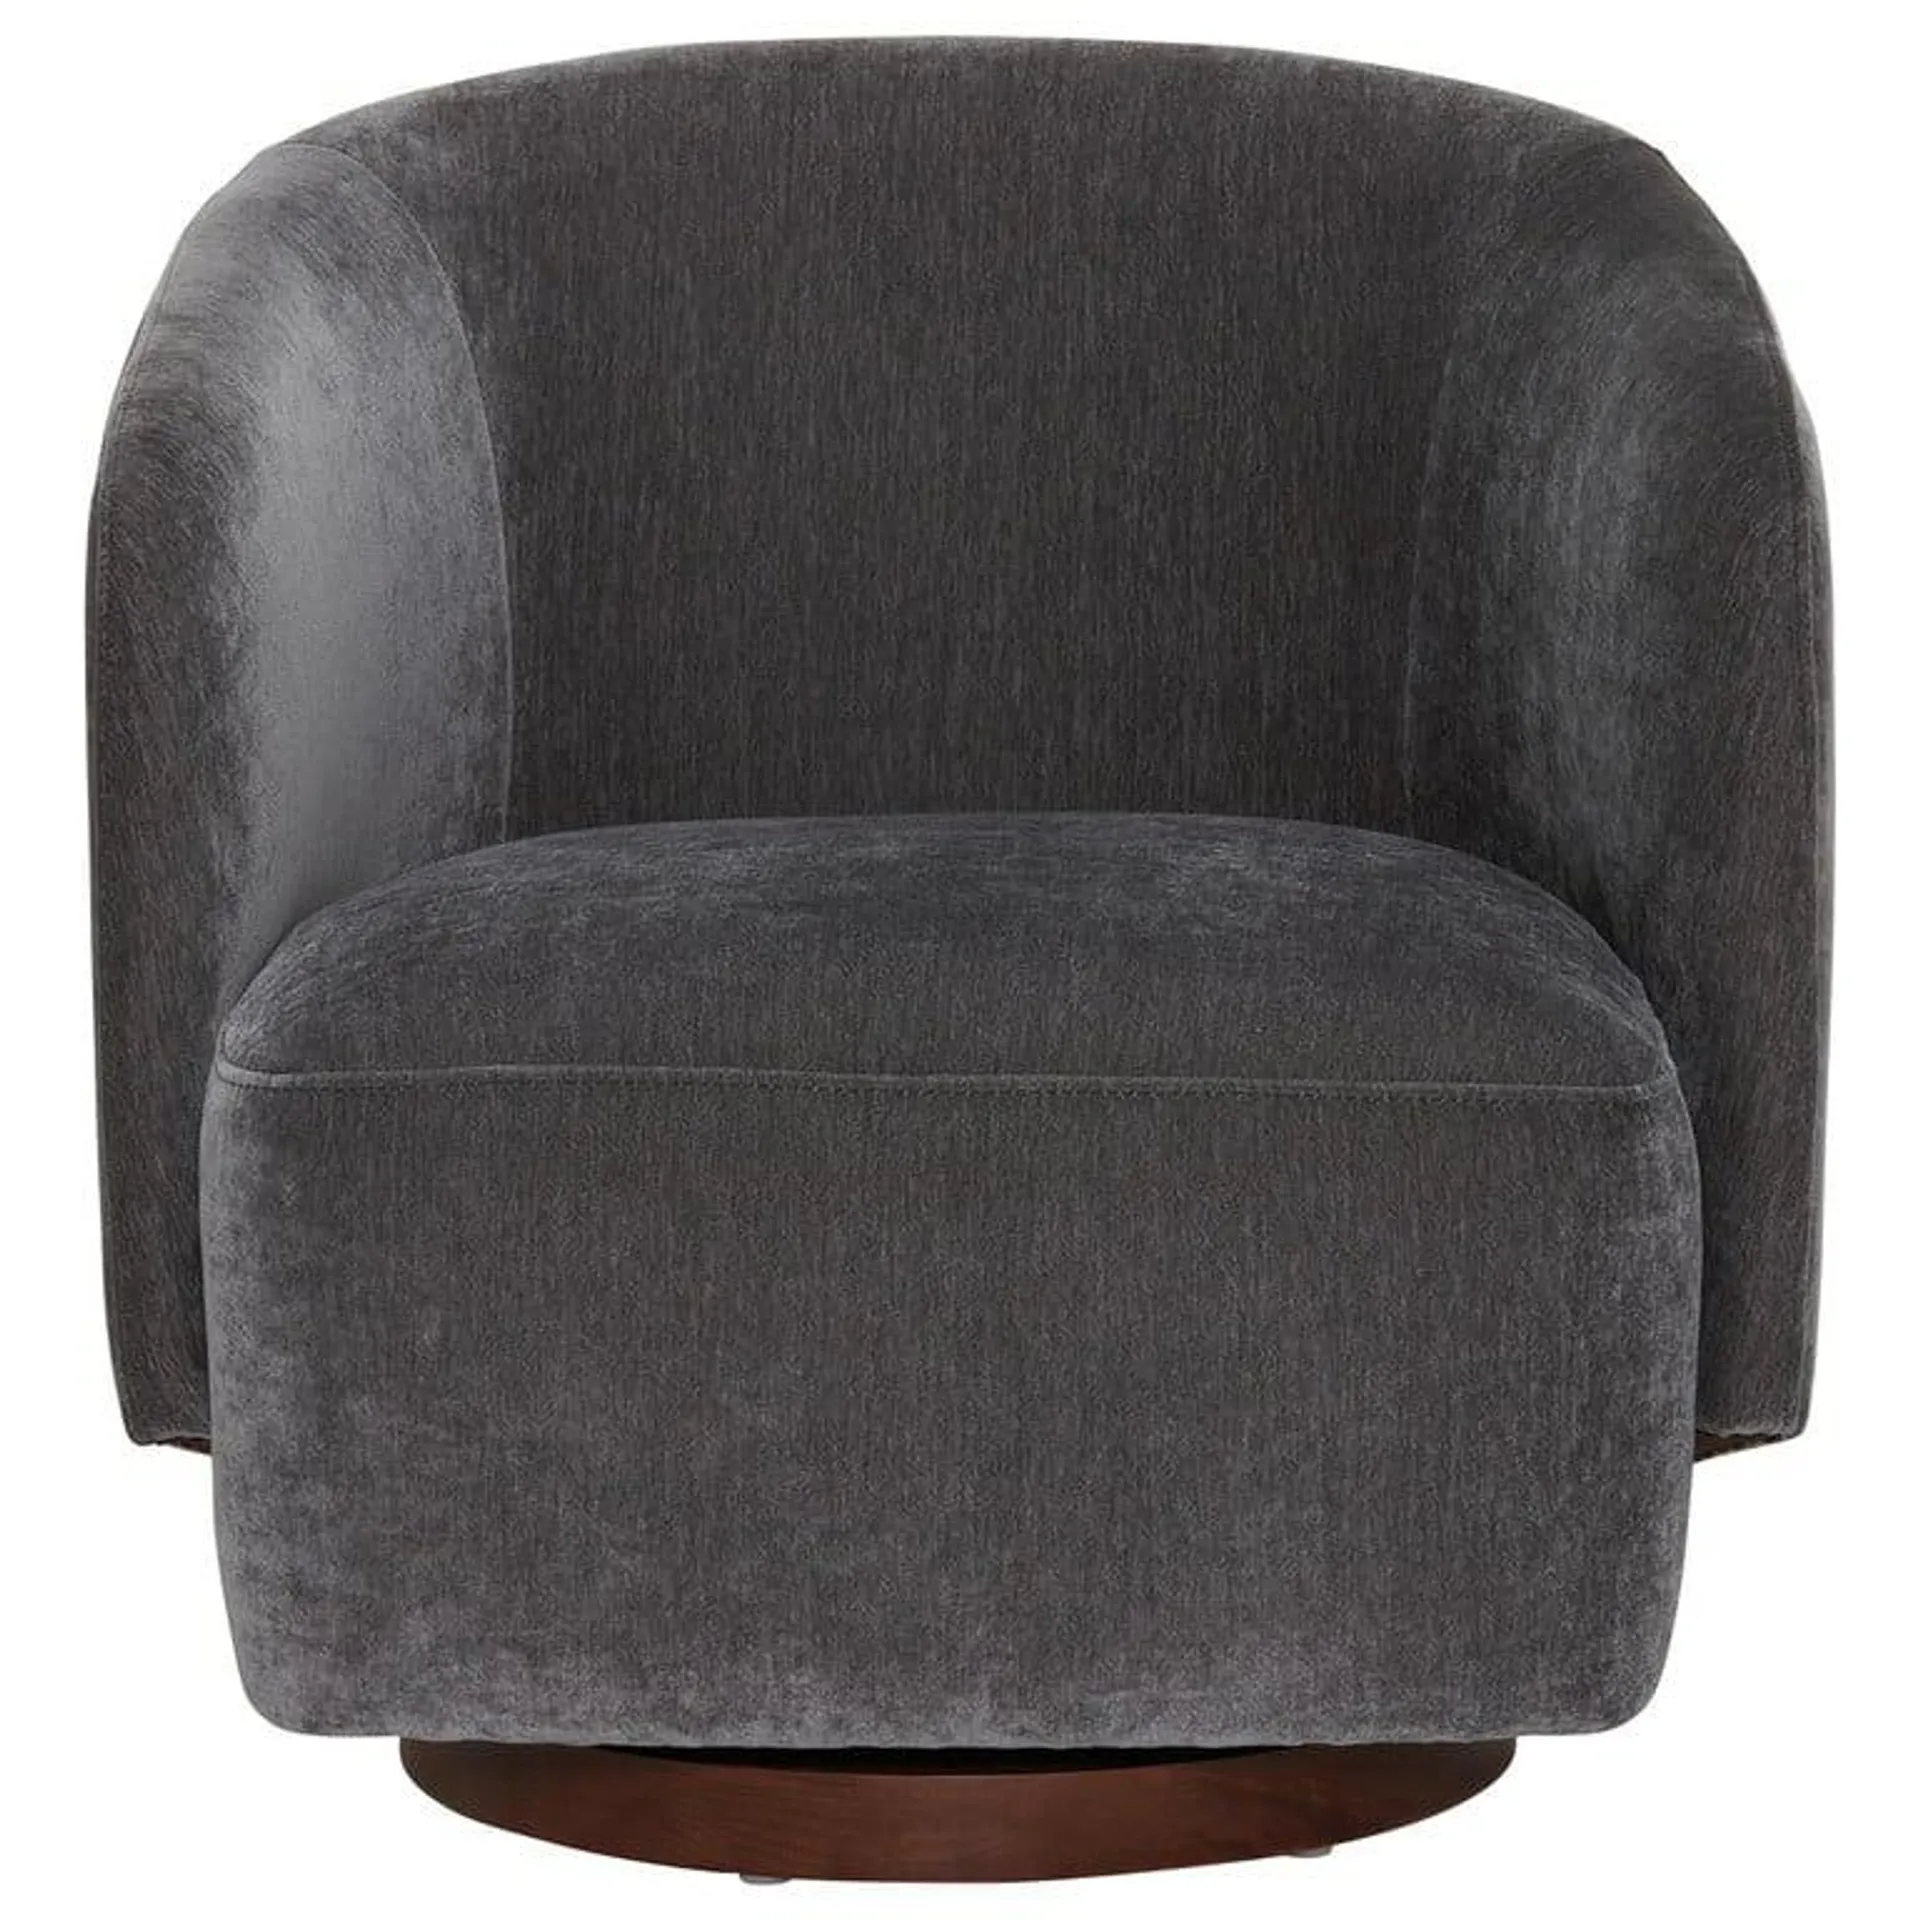 Coal Grey Curved Fabric Swivel Chair